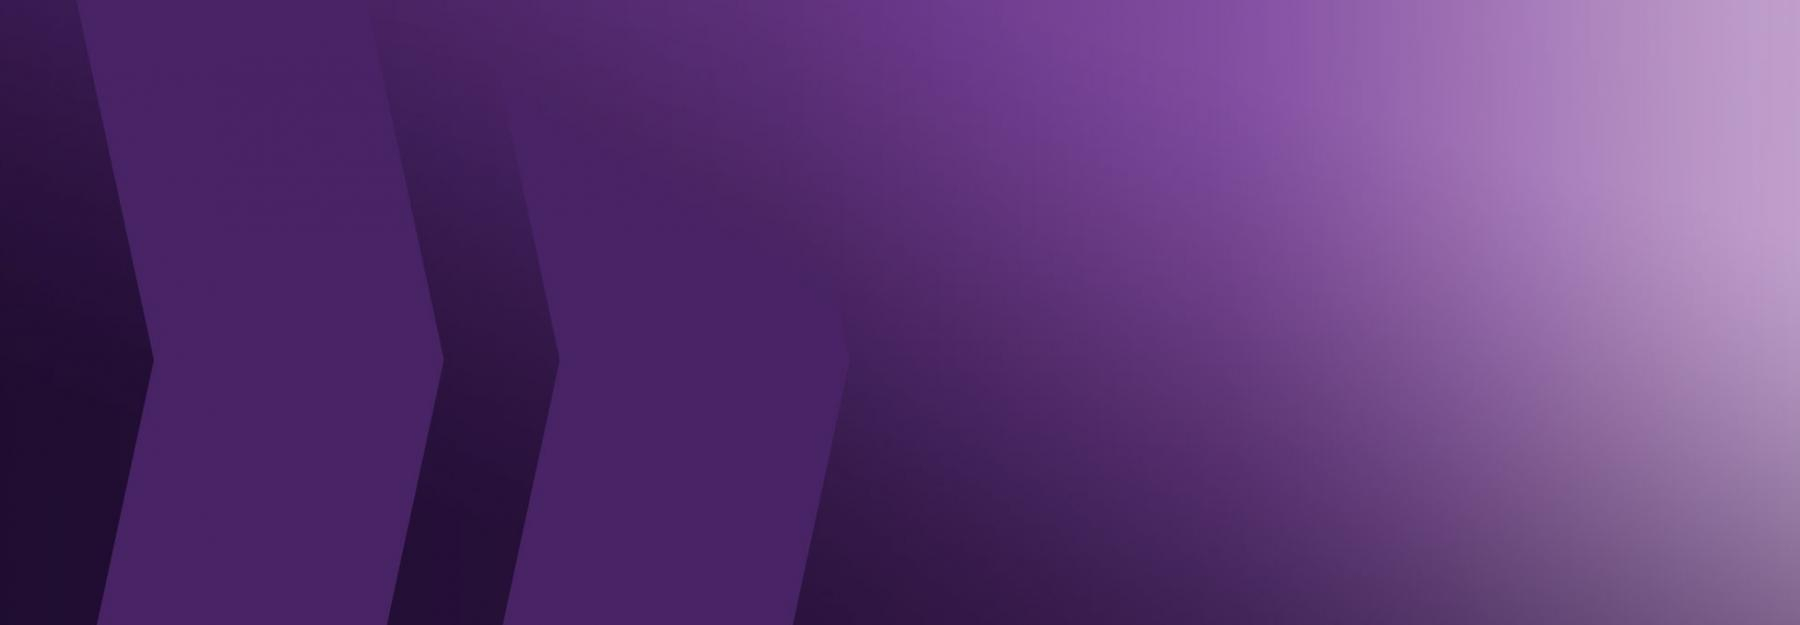 purple wash background